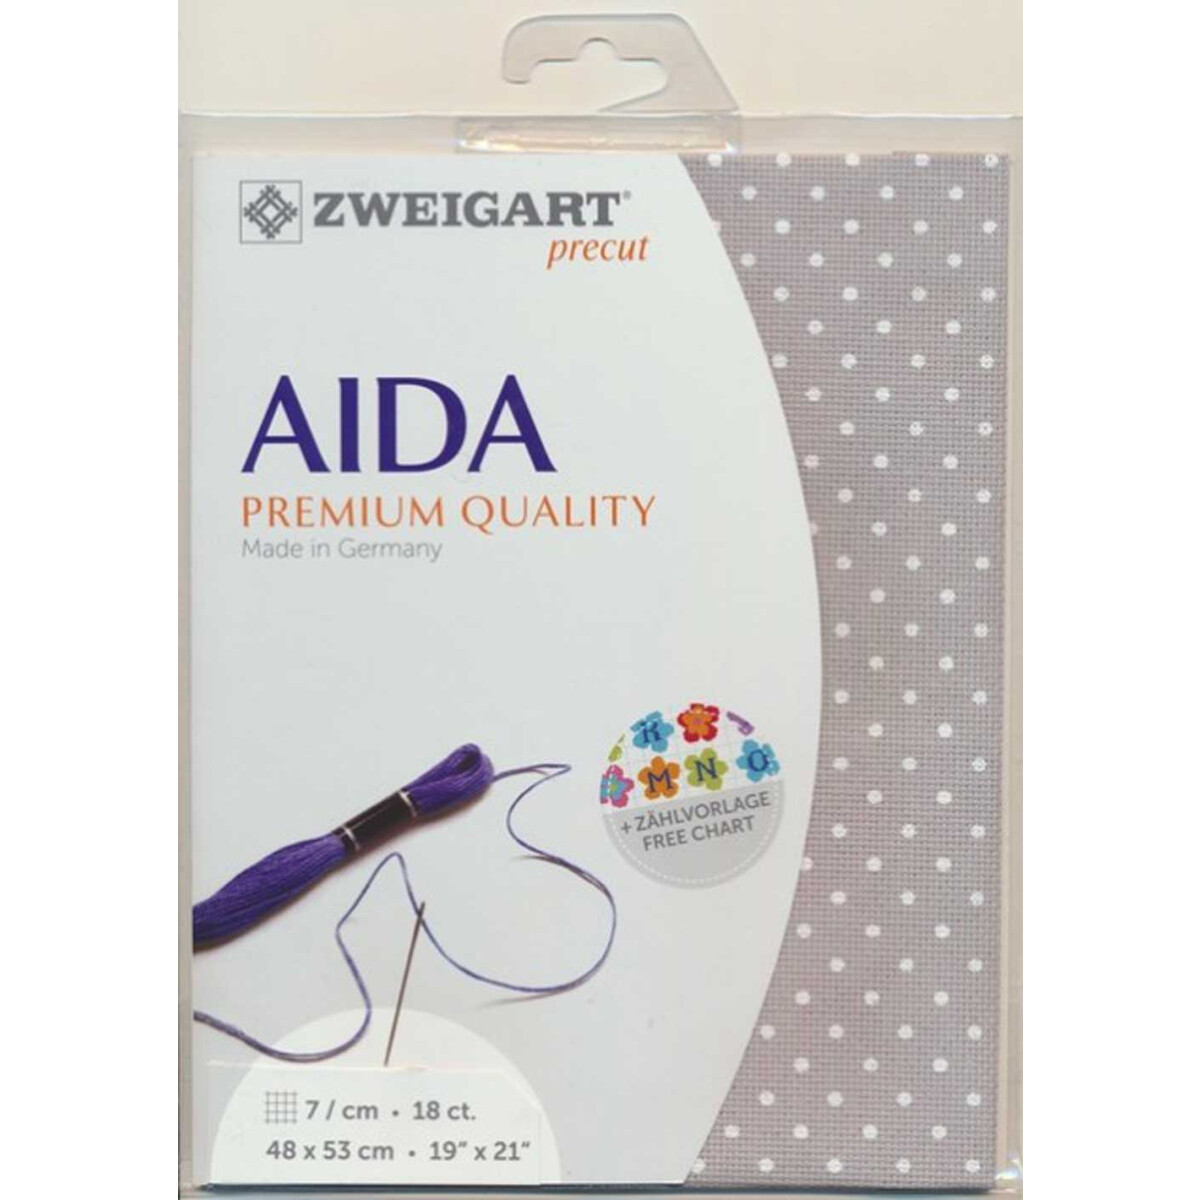 Buy Zweigart Aida Precute 18 ct Fein-Aida 3793 7349 gray/white dots